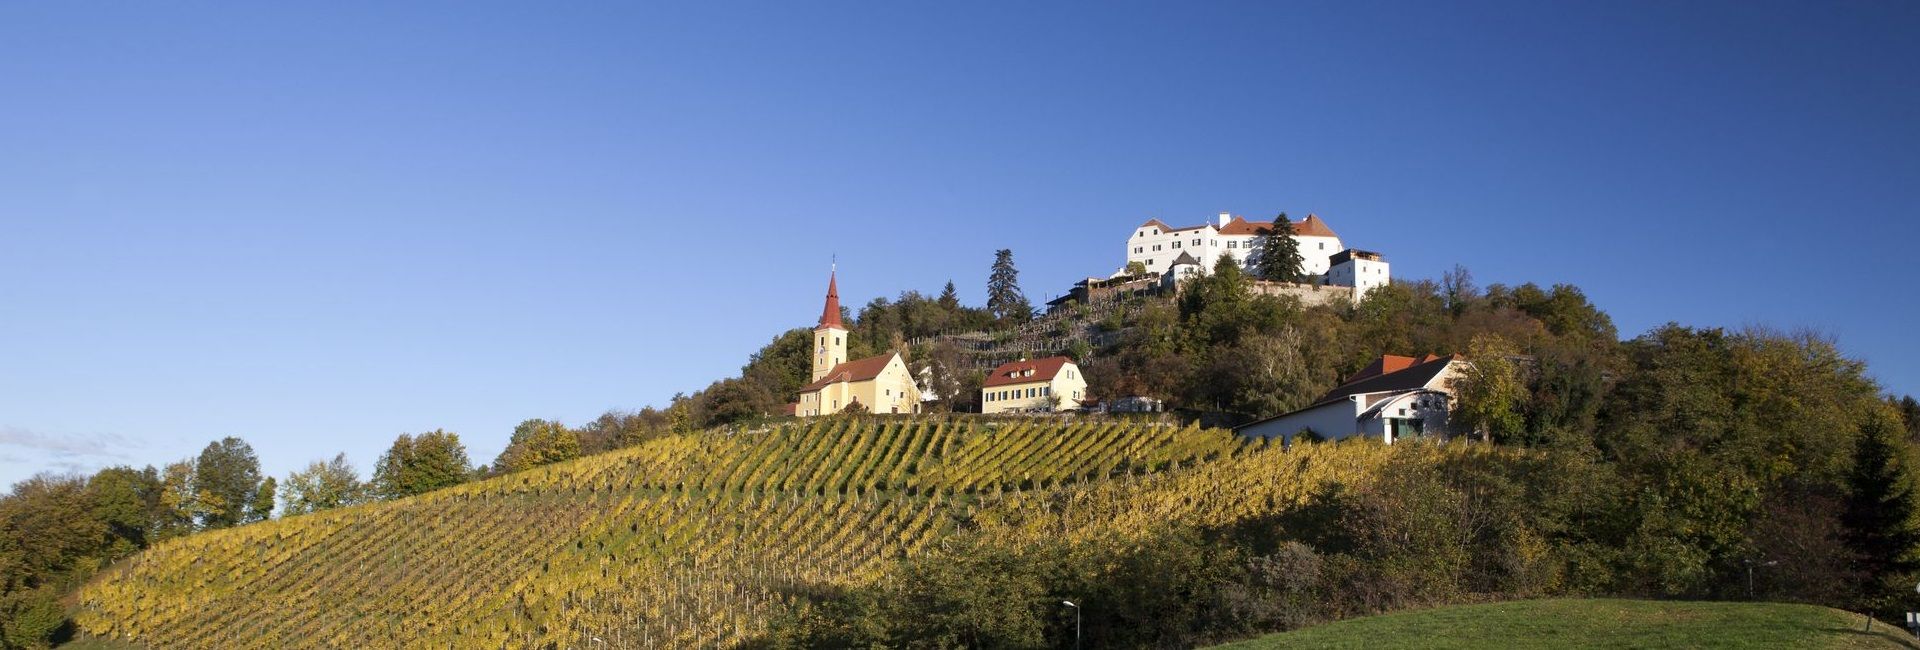 Kapfenstein Castle with vinyards in autumn